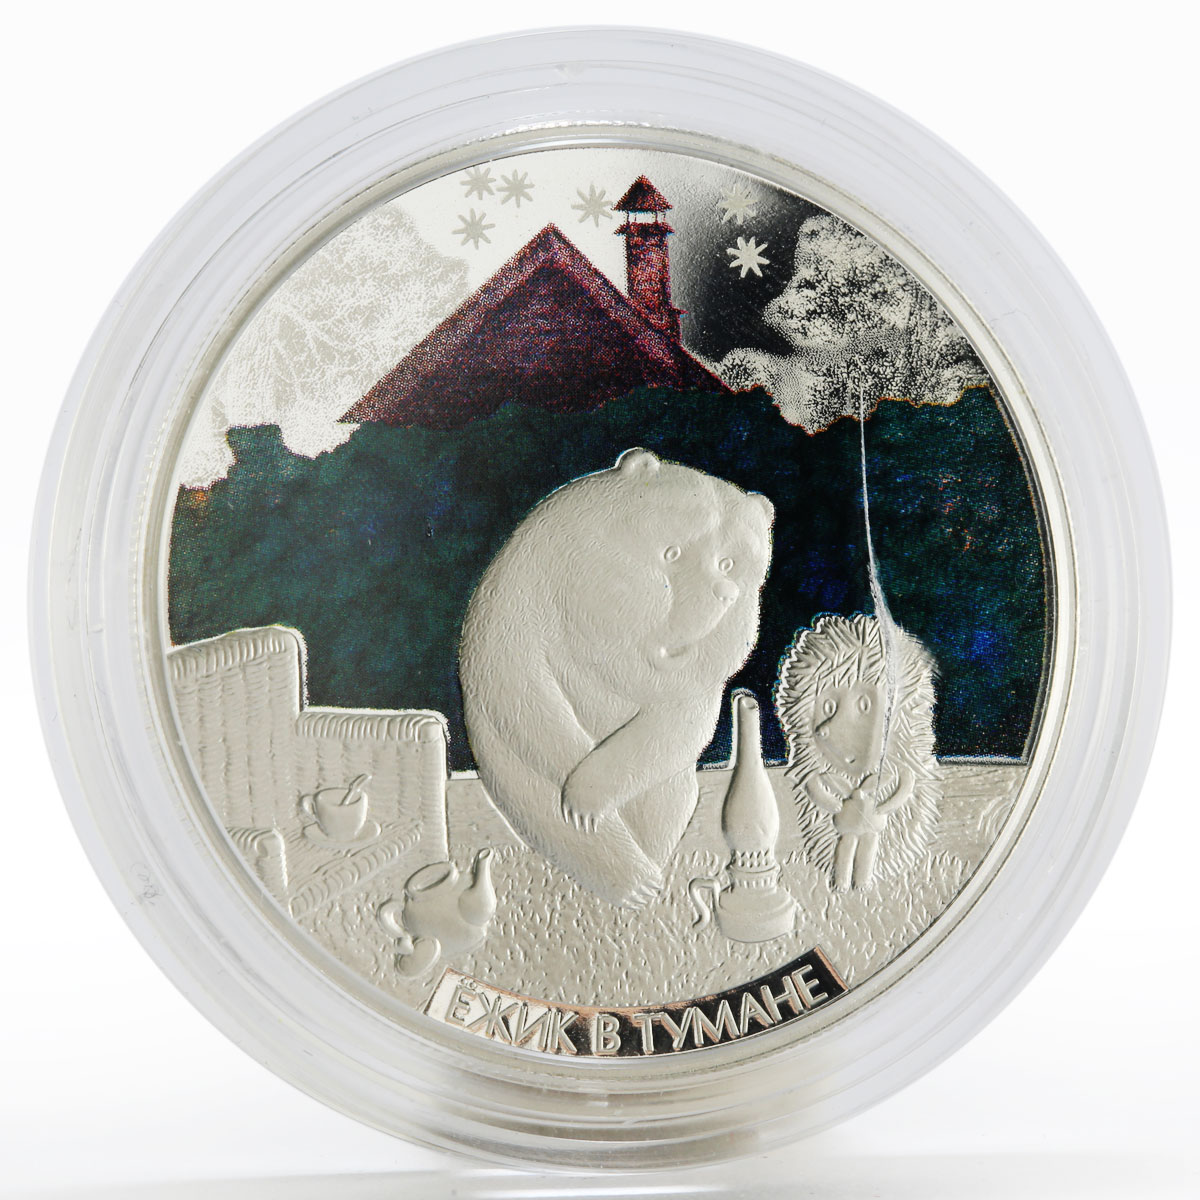 Ghana 5 cedis The Hedgehog and The Bear colored silver coin 2013